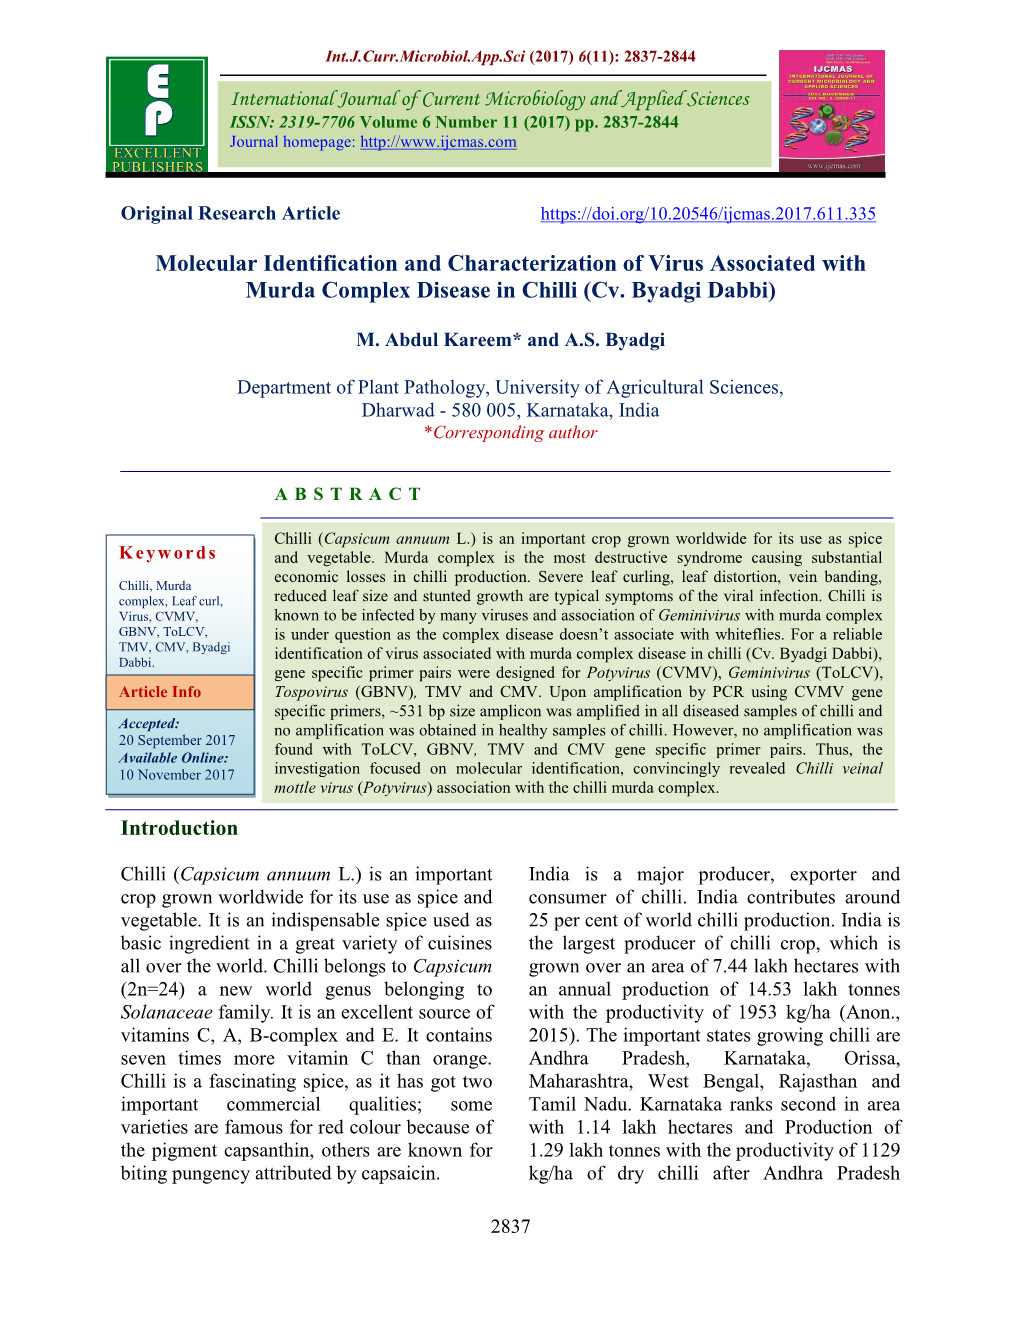 Molecular Identification and Characterization of Virus Associated with Murda Complex Disease in Chilli (Cv. Byadgi Dabbi)